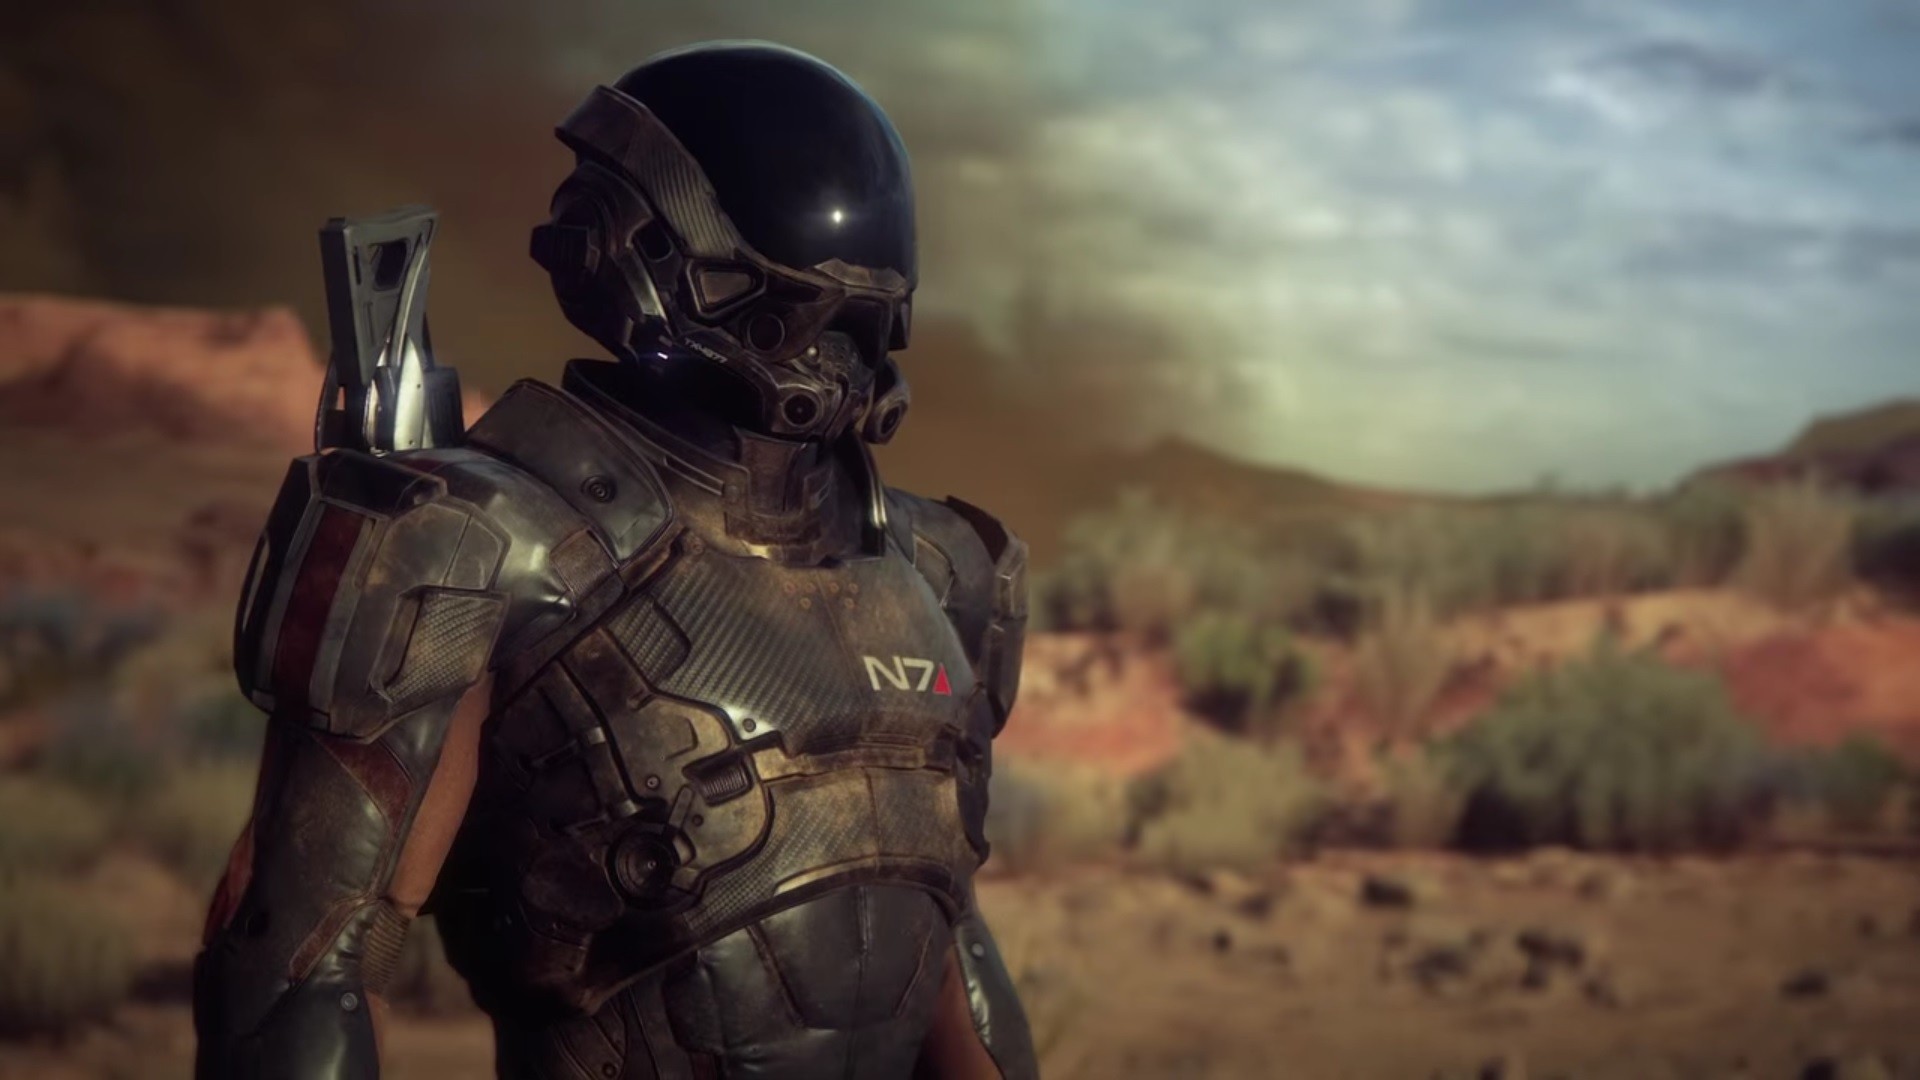 General 1920x1080 Mass Effect: Andromeda CGI Mass Effect digital art science fiction video games PC gaming screen shot futuristic armor